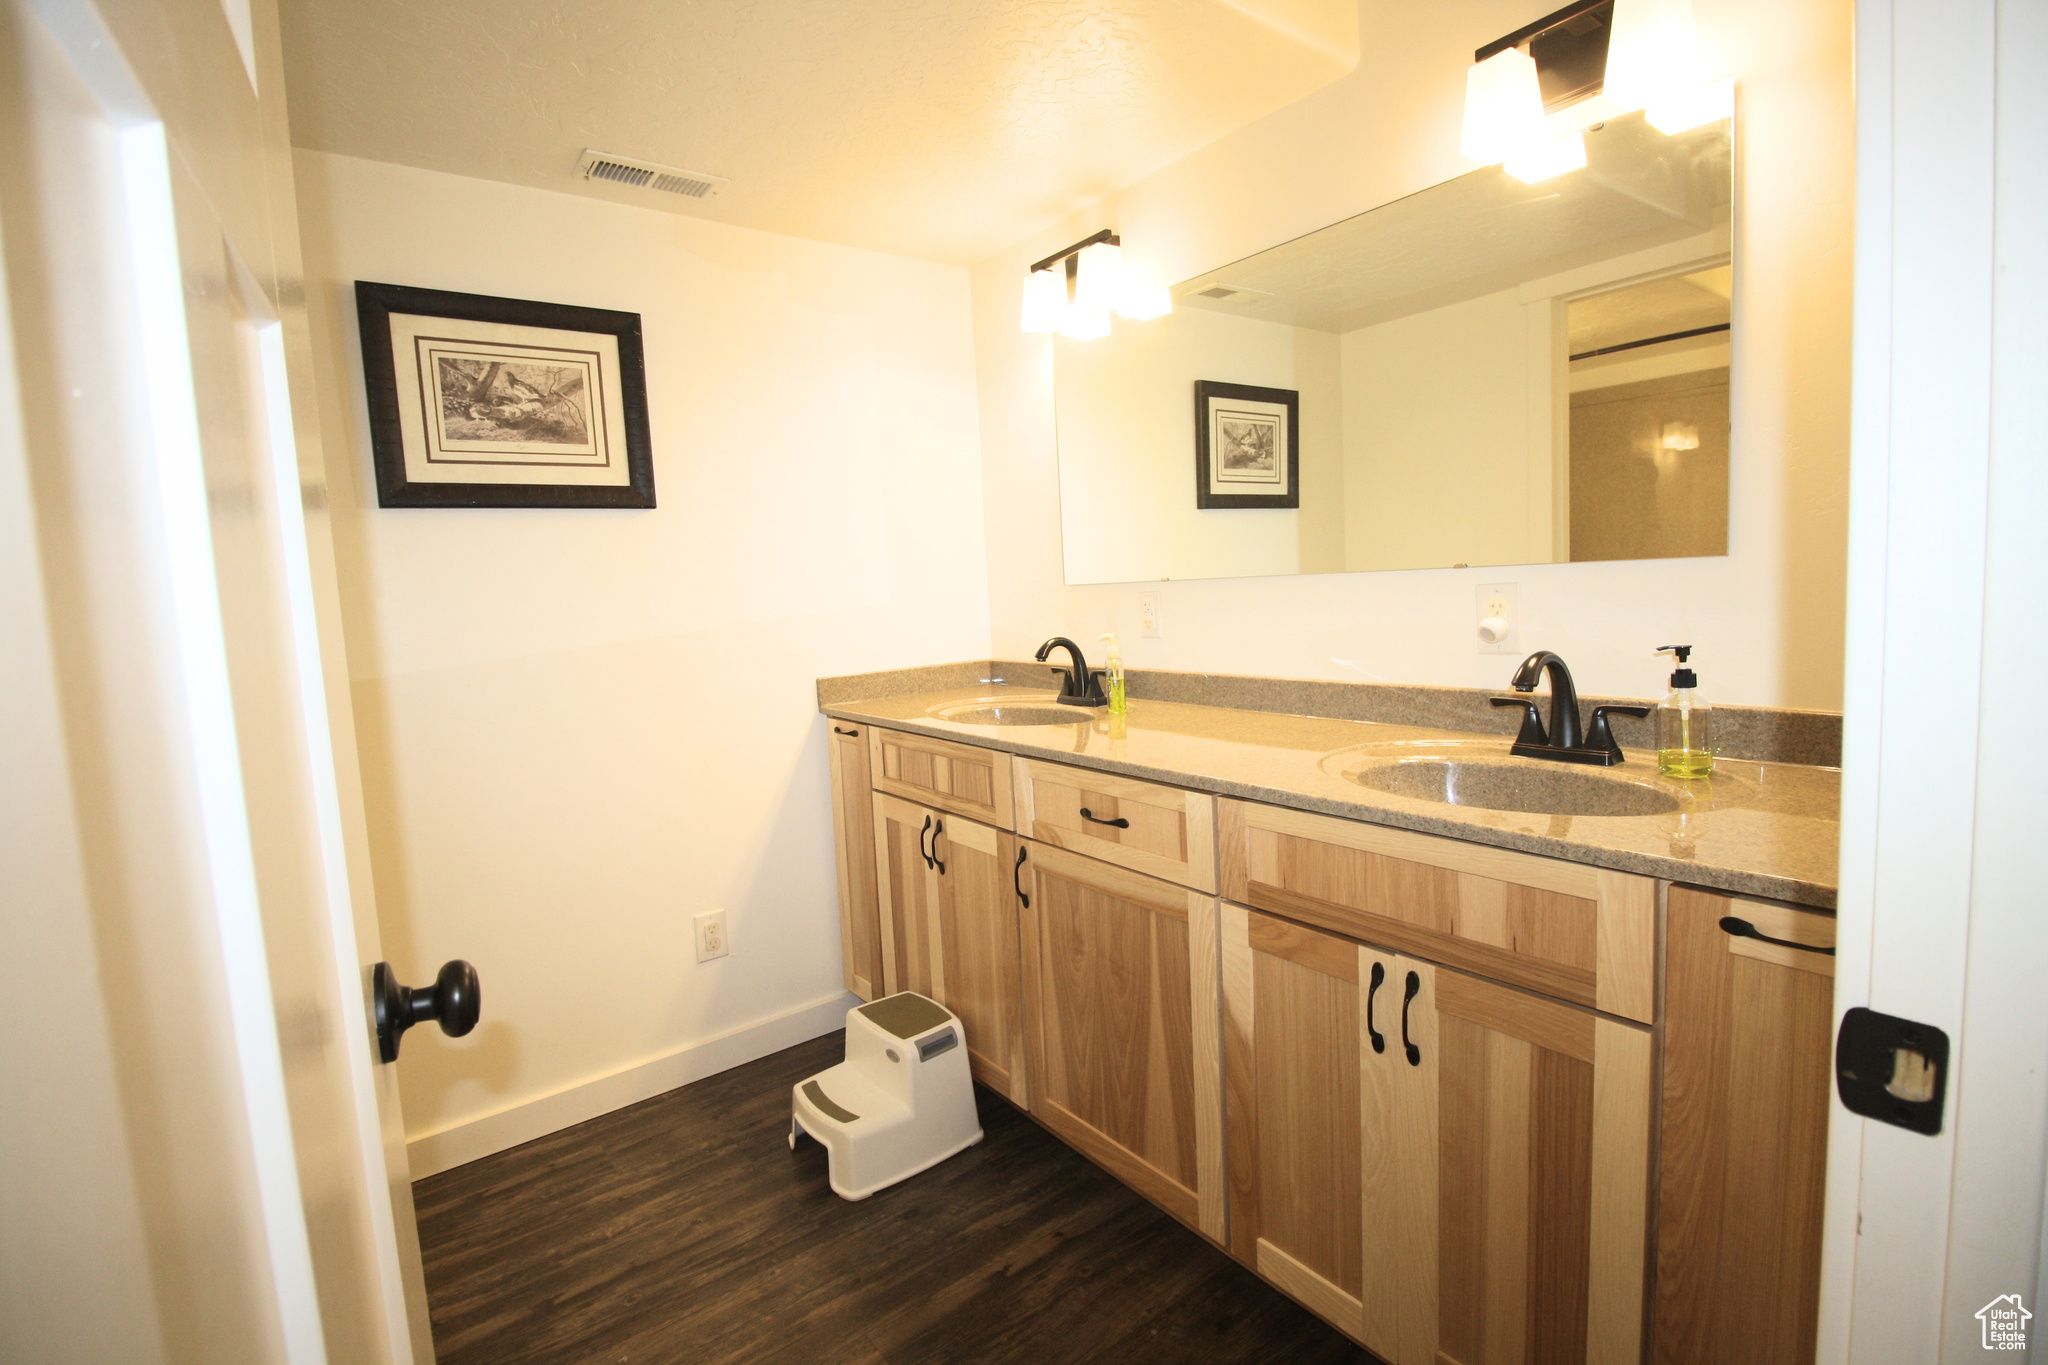 Bathroom with hardwood / wood-style floors, Silestone Countertops, and dual vanity